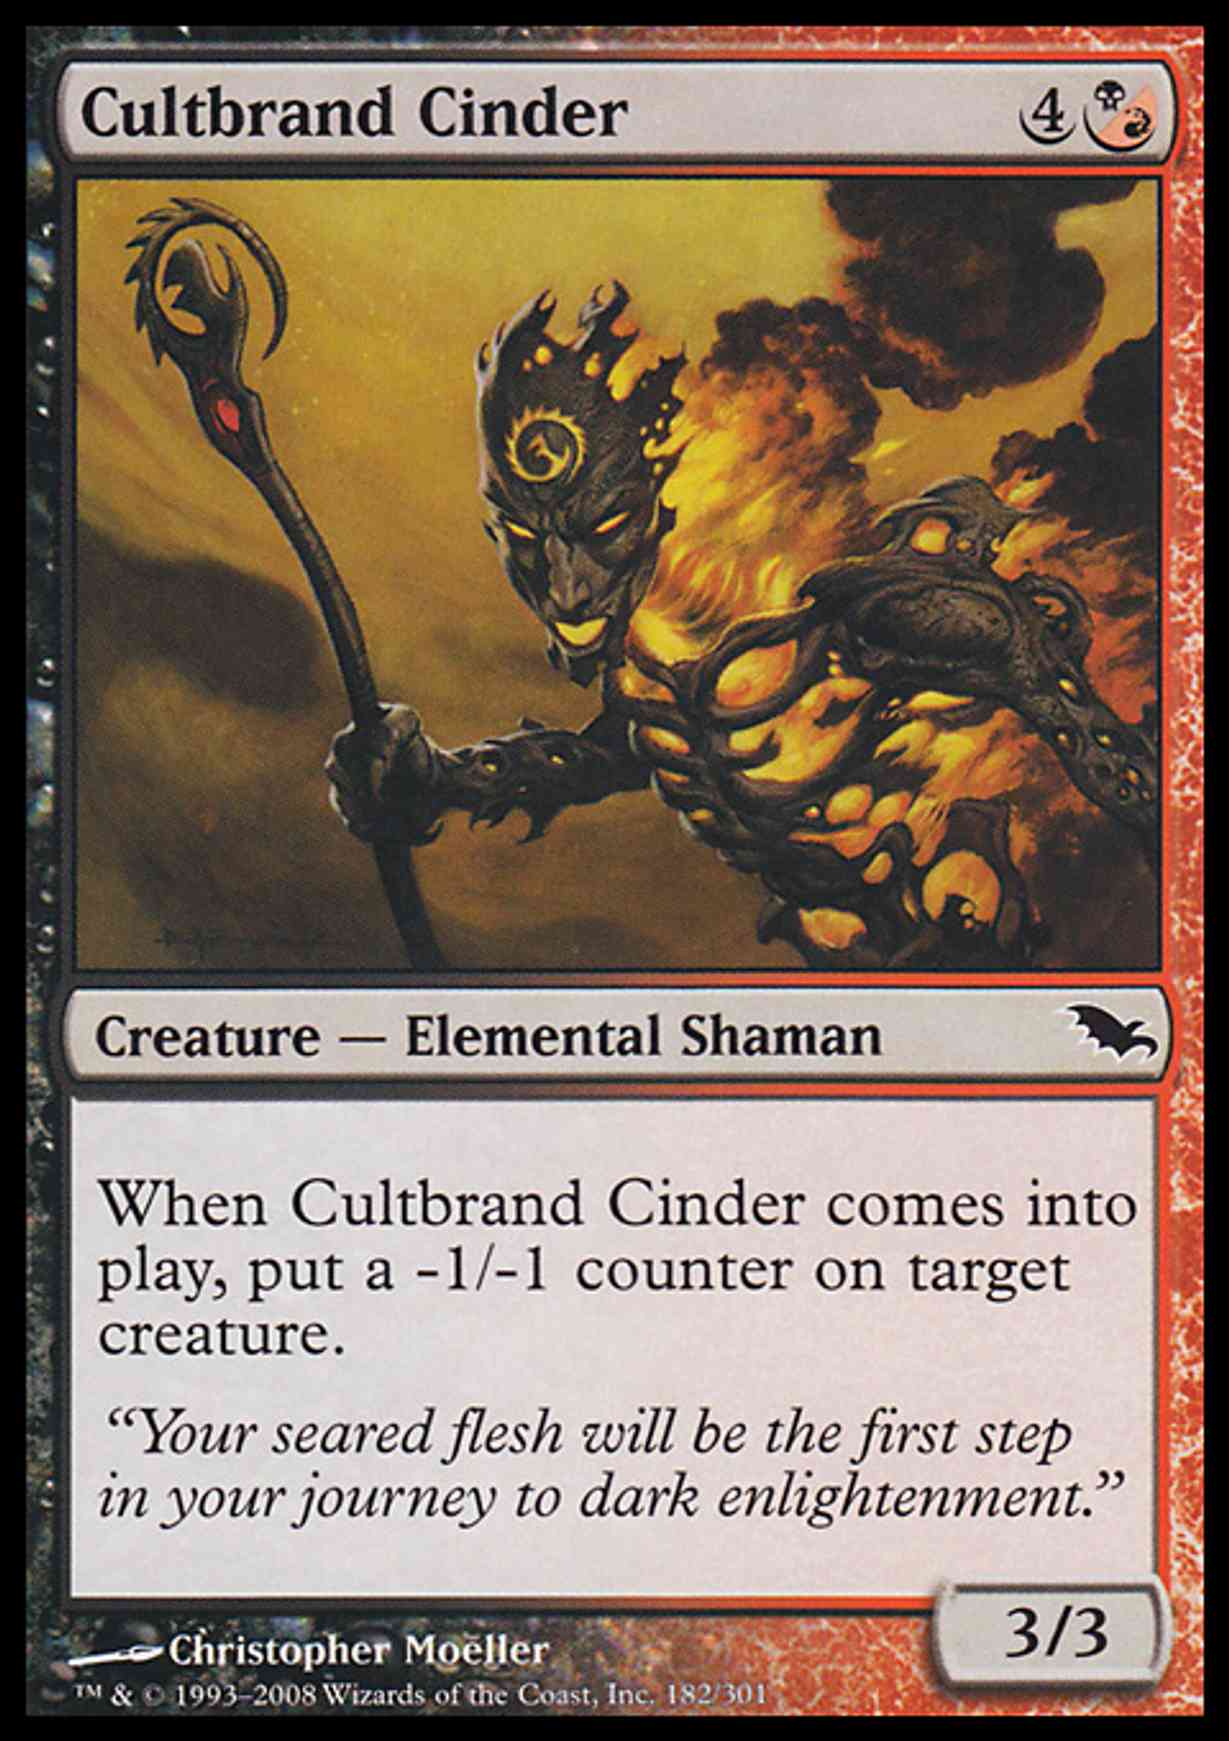 Cultbrand Cinder magic card front